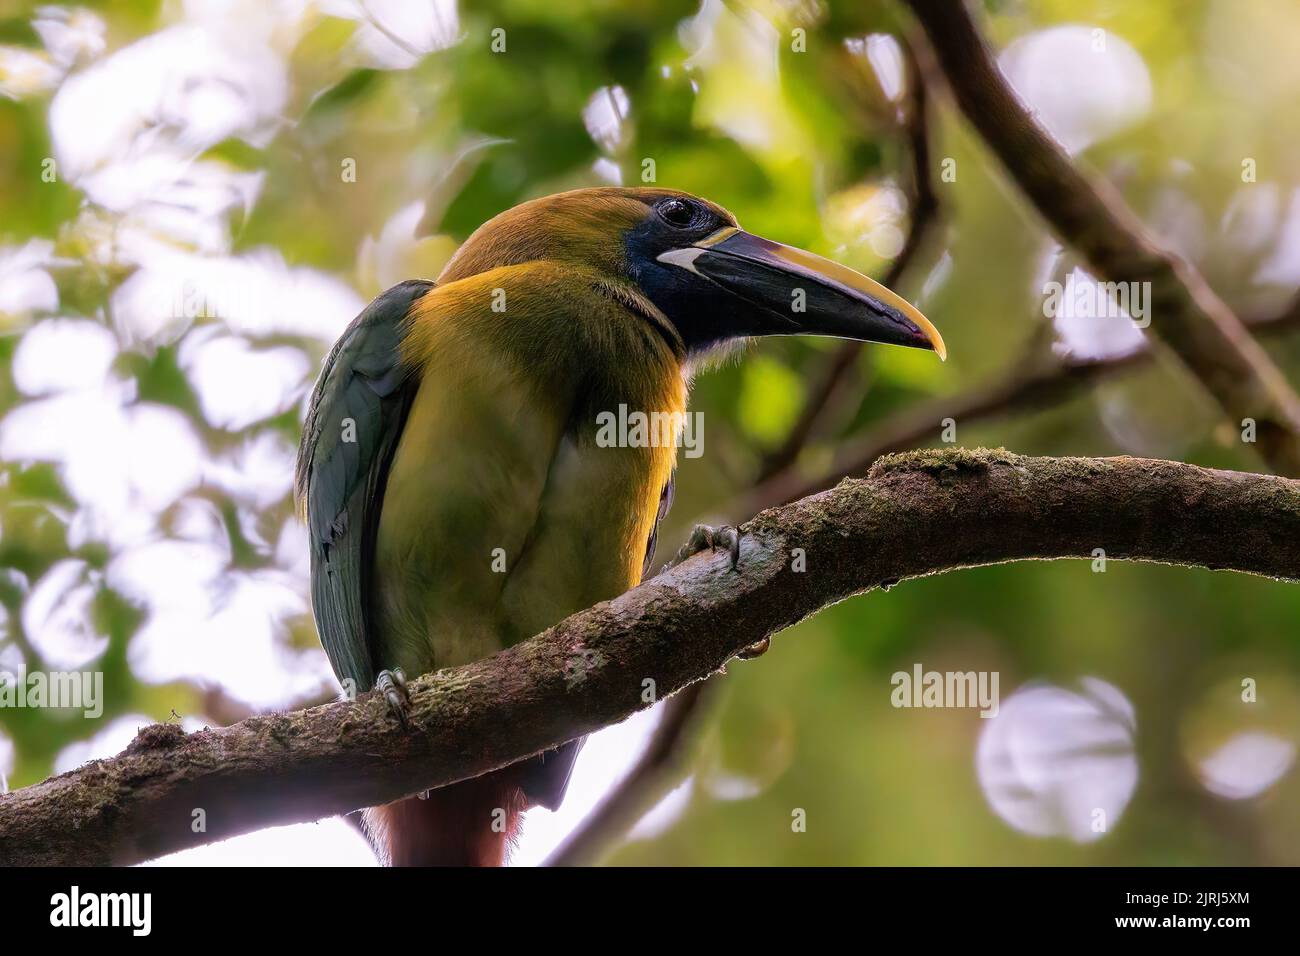 Emerald toucanet (Aulacorhynchus prasinus) perching on a branch in Curi Cancha wildlife refuge, Costa Rica Stock Photo